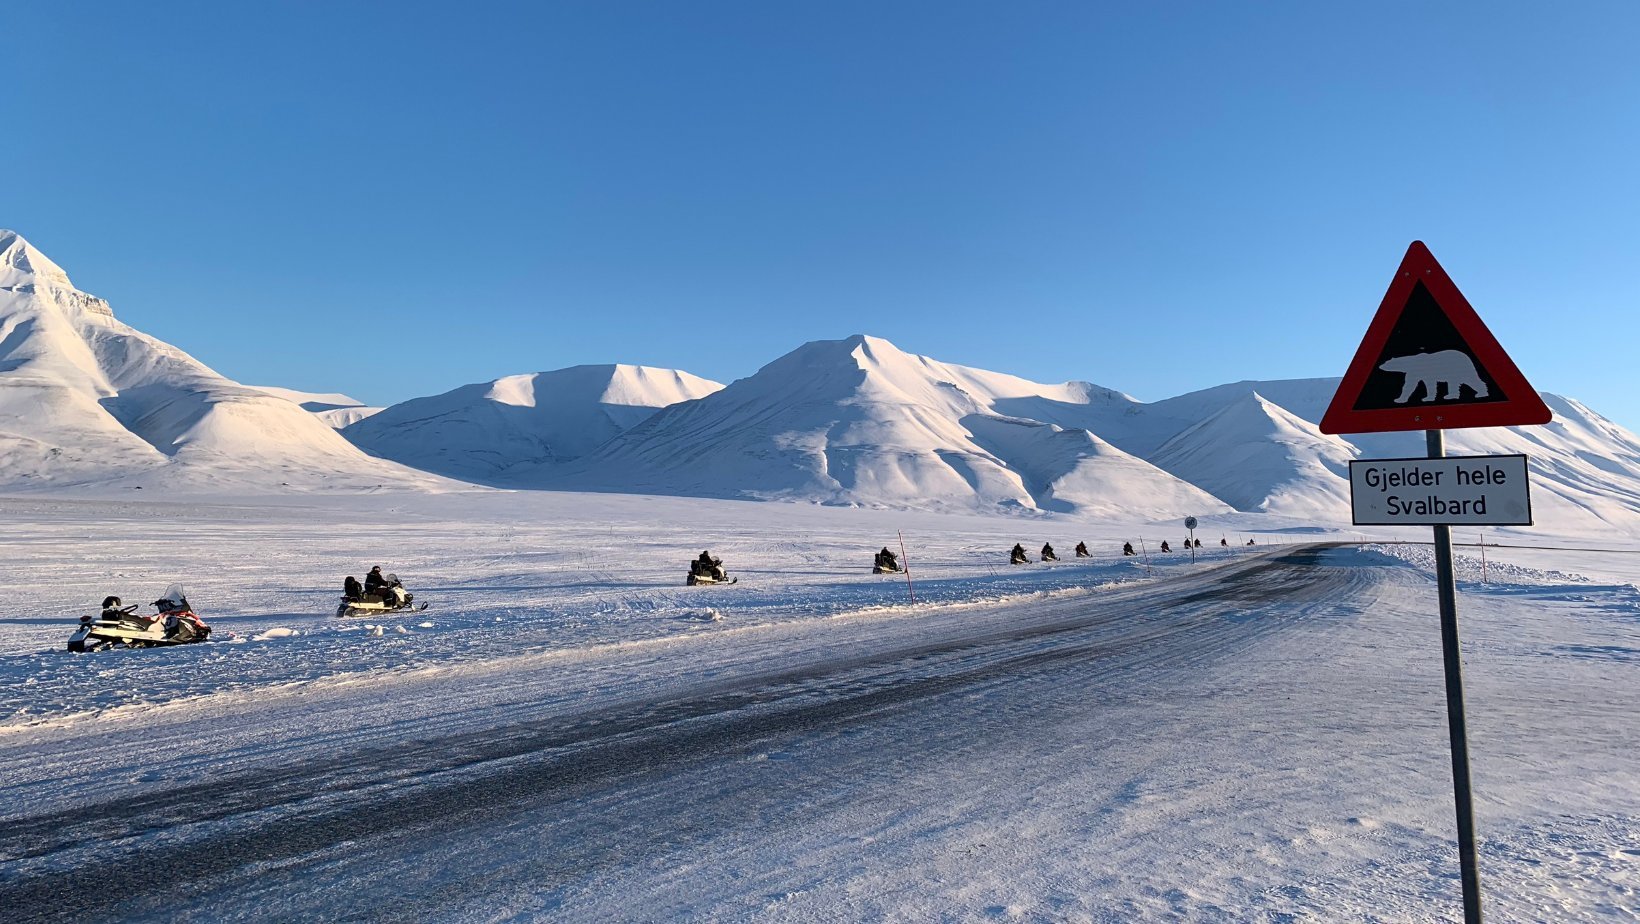 Snowscooter road in Svalbard winter. Photo: David Nikel.